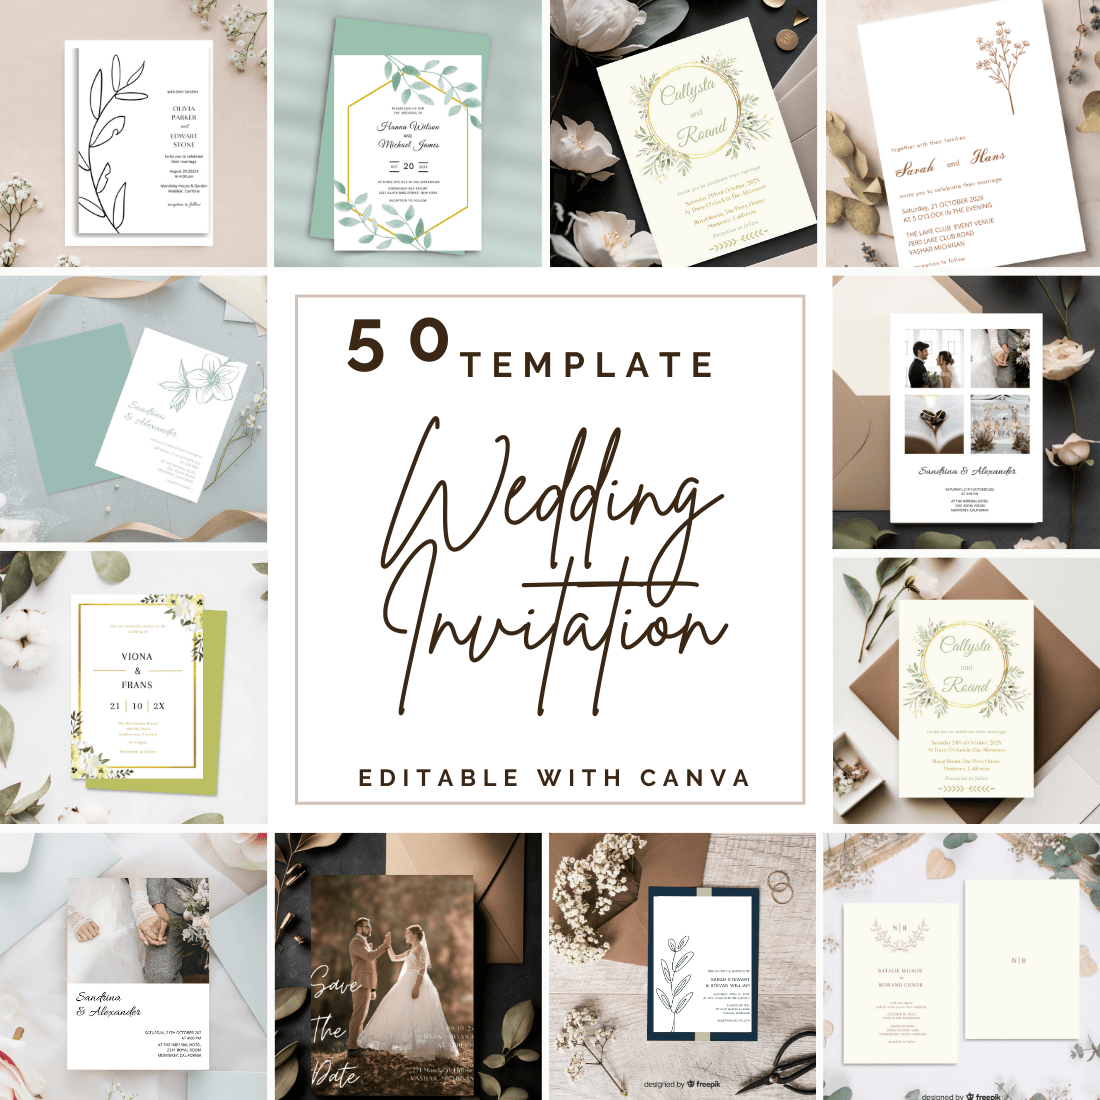 50 Wedding Invitation Template cover image.